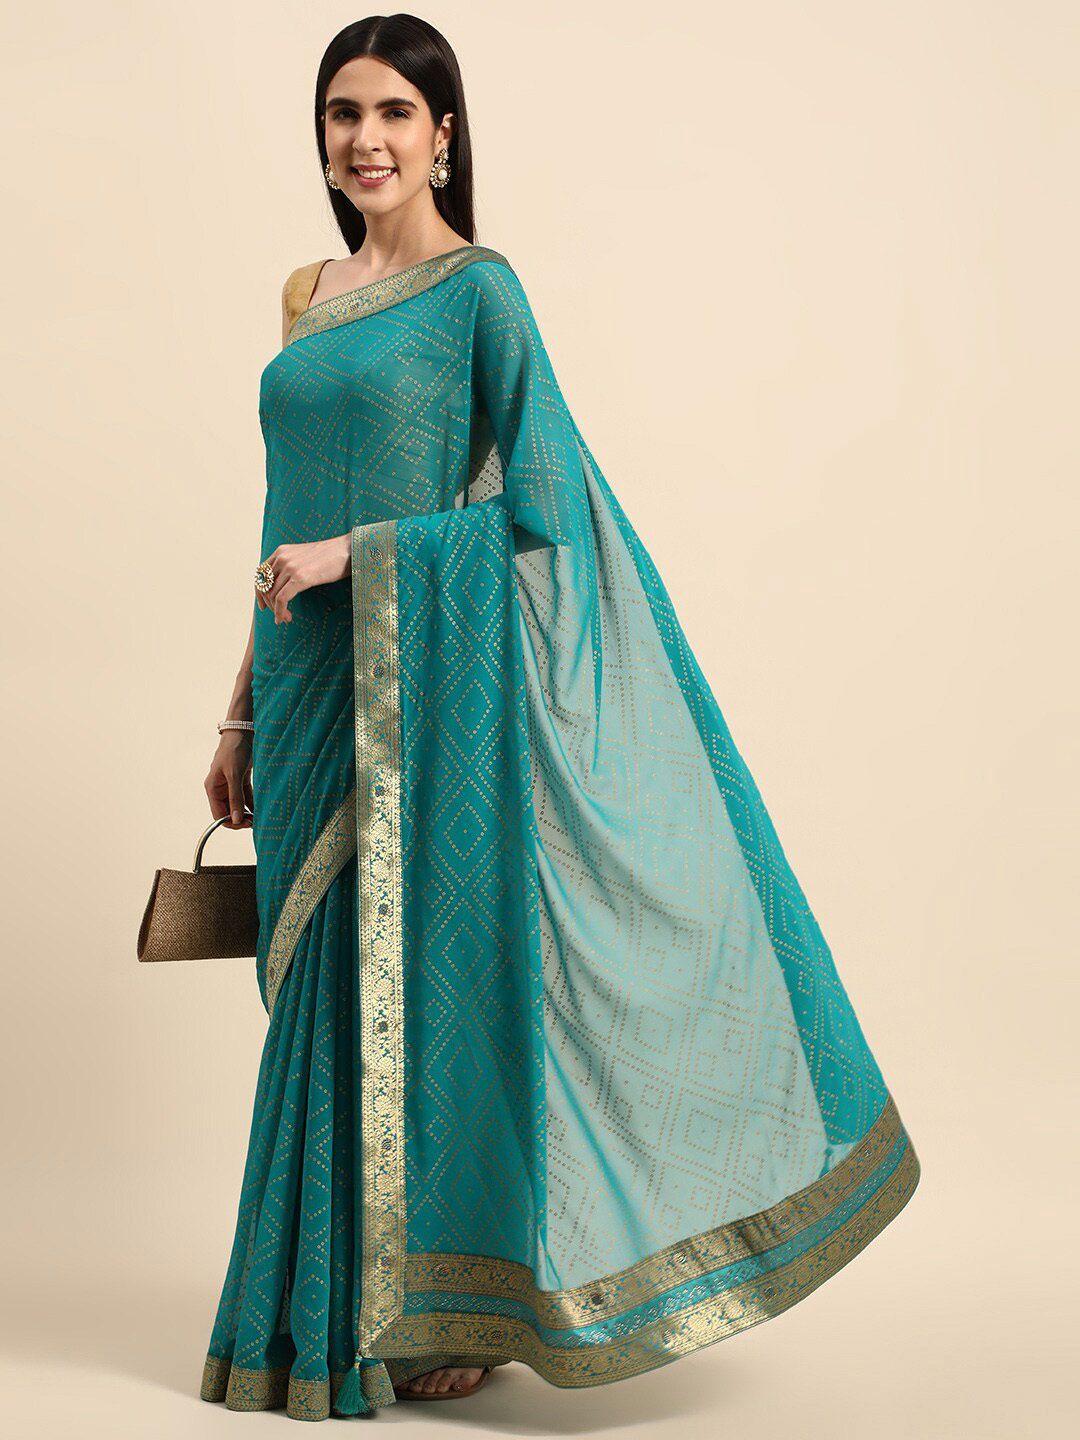 mitera turquoise blue & gold-toned bandhani printed zari pure georgette saree